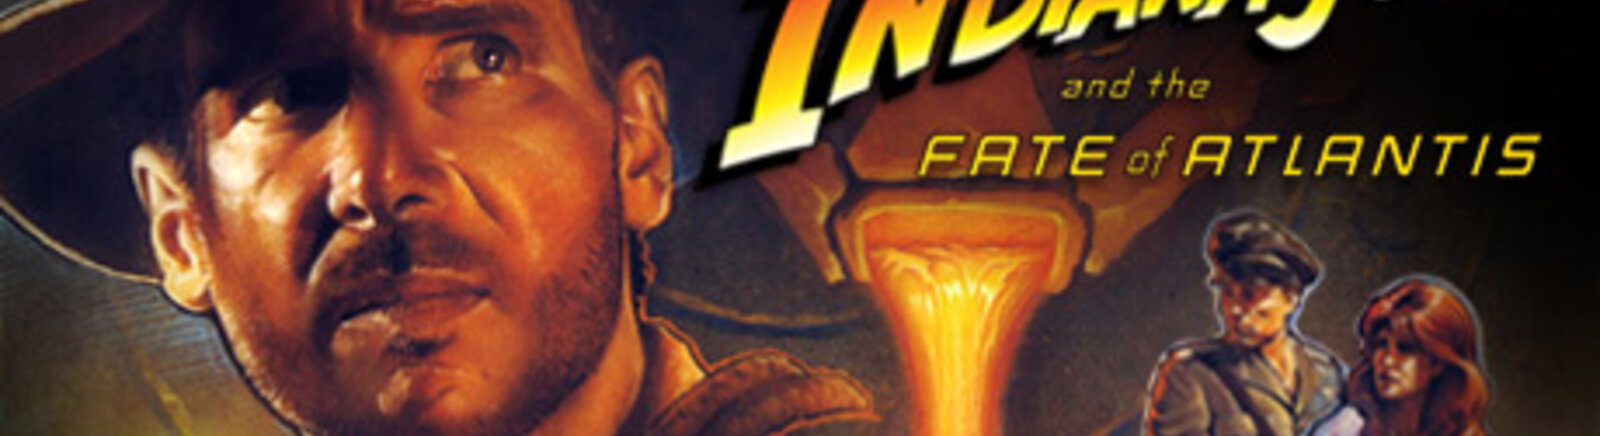 Дата выхода Indiana Jones and the Fate of Atlantis  на PC, Mac и Amiga в России и во всем мире